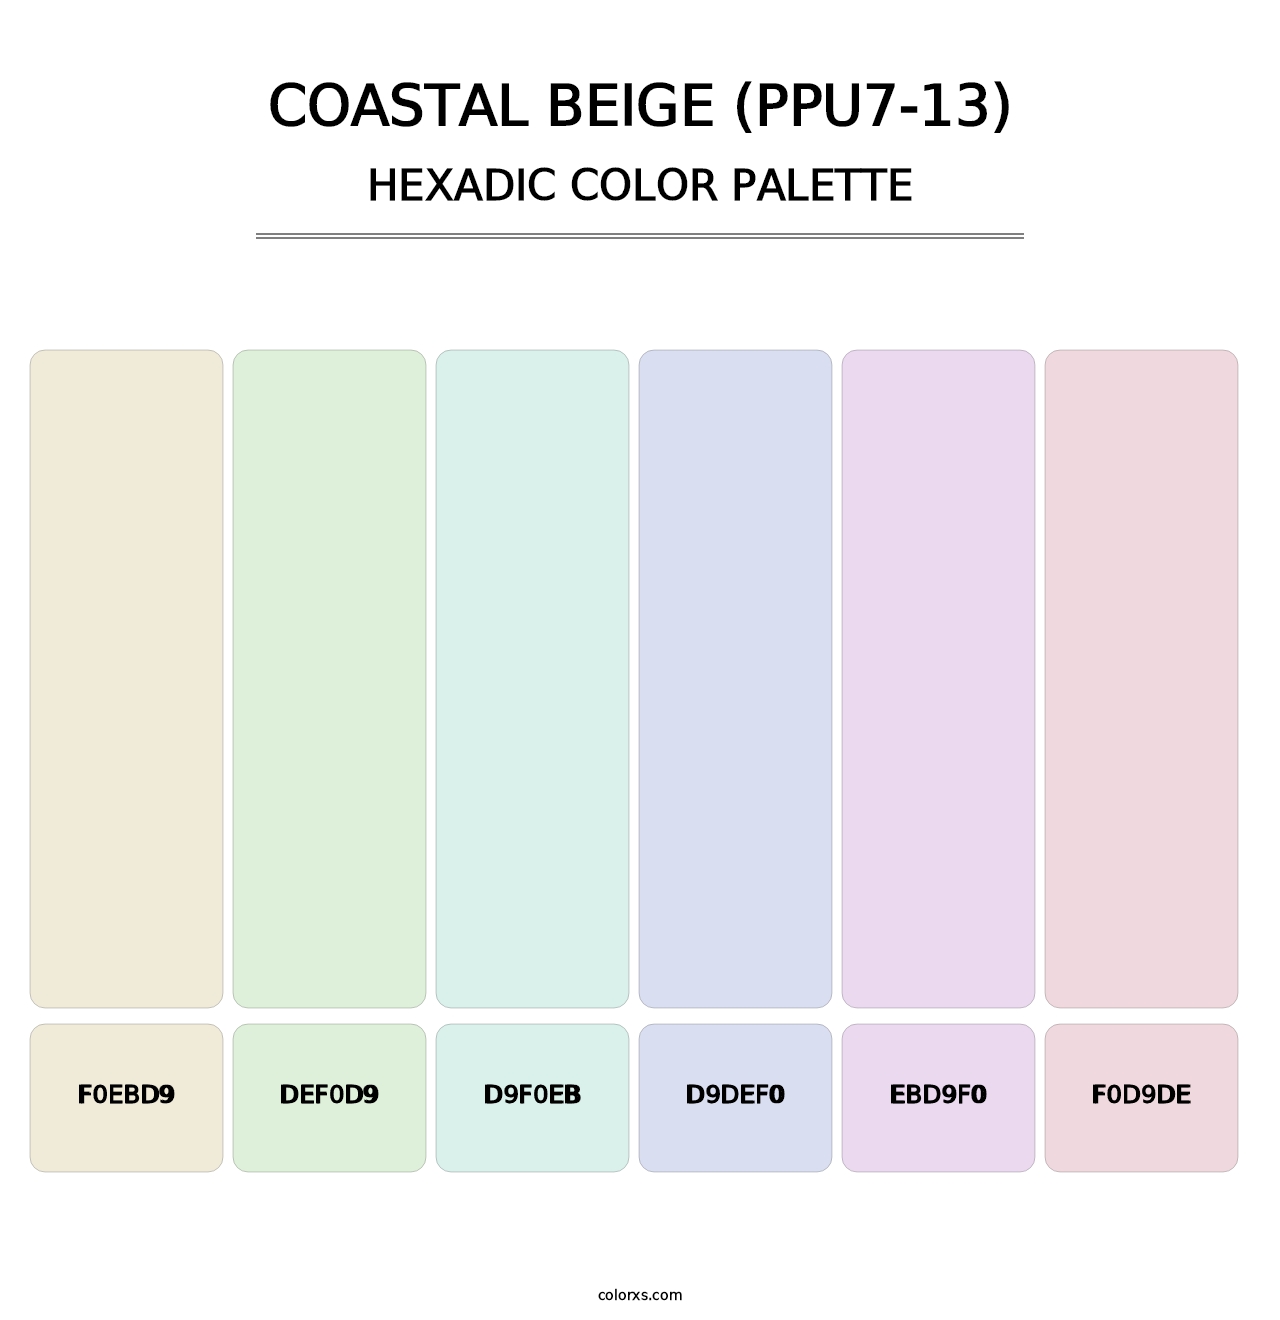 Coastal Beige (PPU7-13) - Hexadic Color Palette